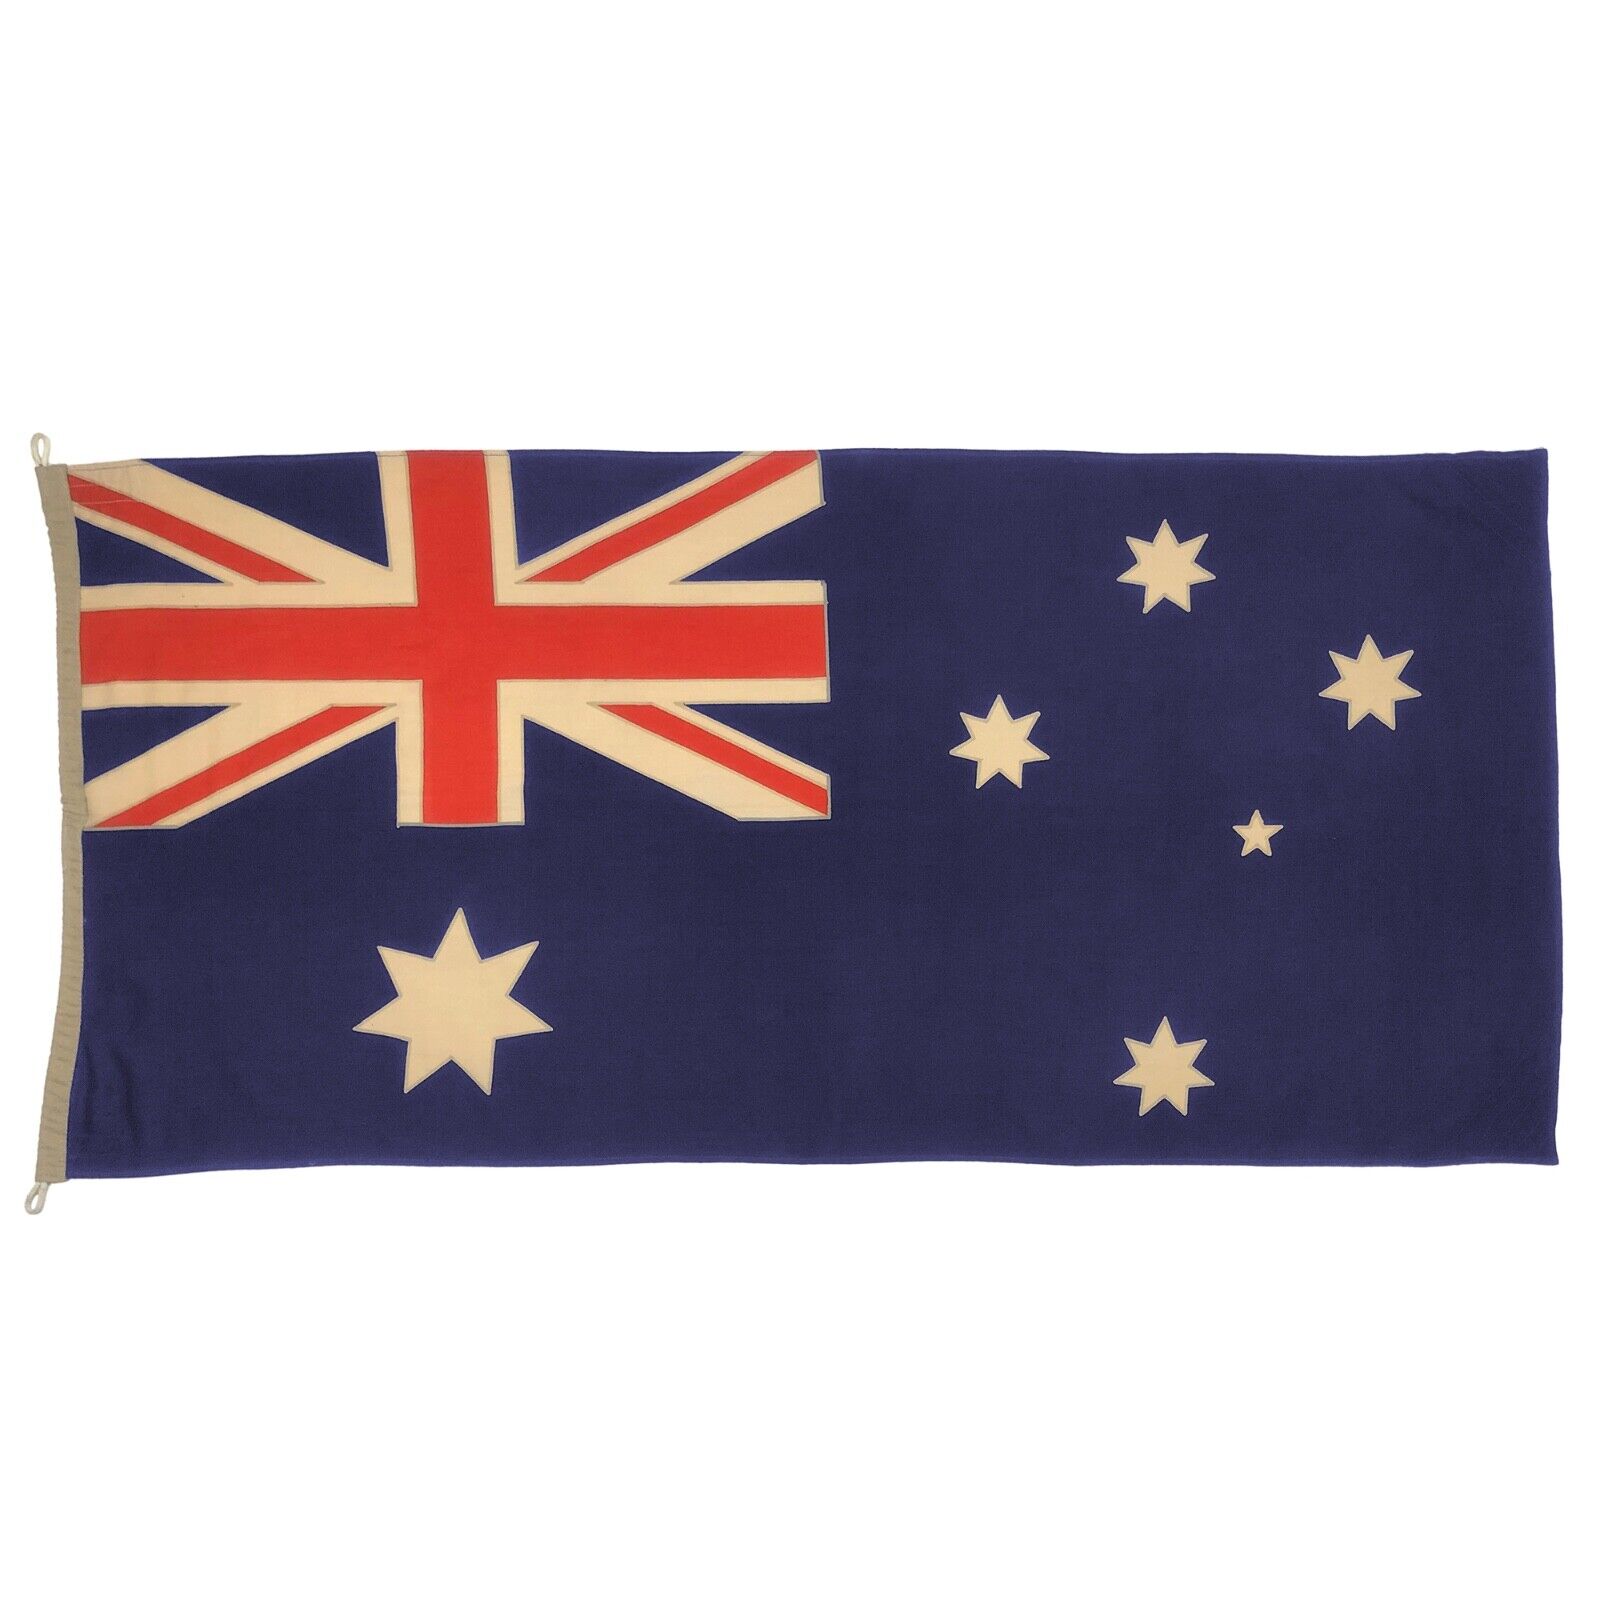 Vintage Wool Hand-Painted Flag Australia Banner Old Cloth Union Jack Textile Art